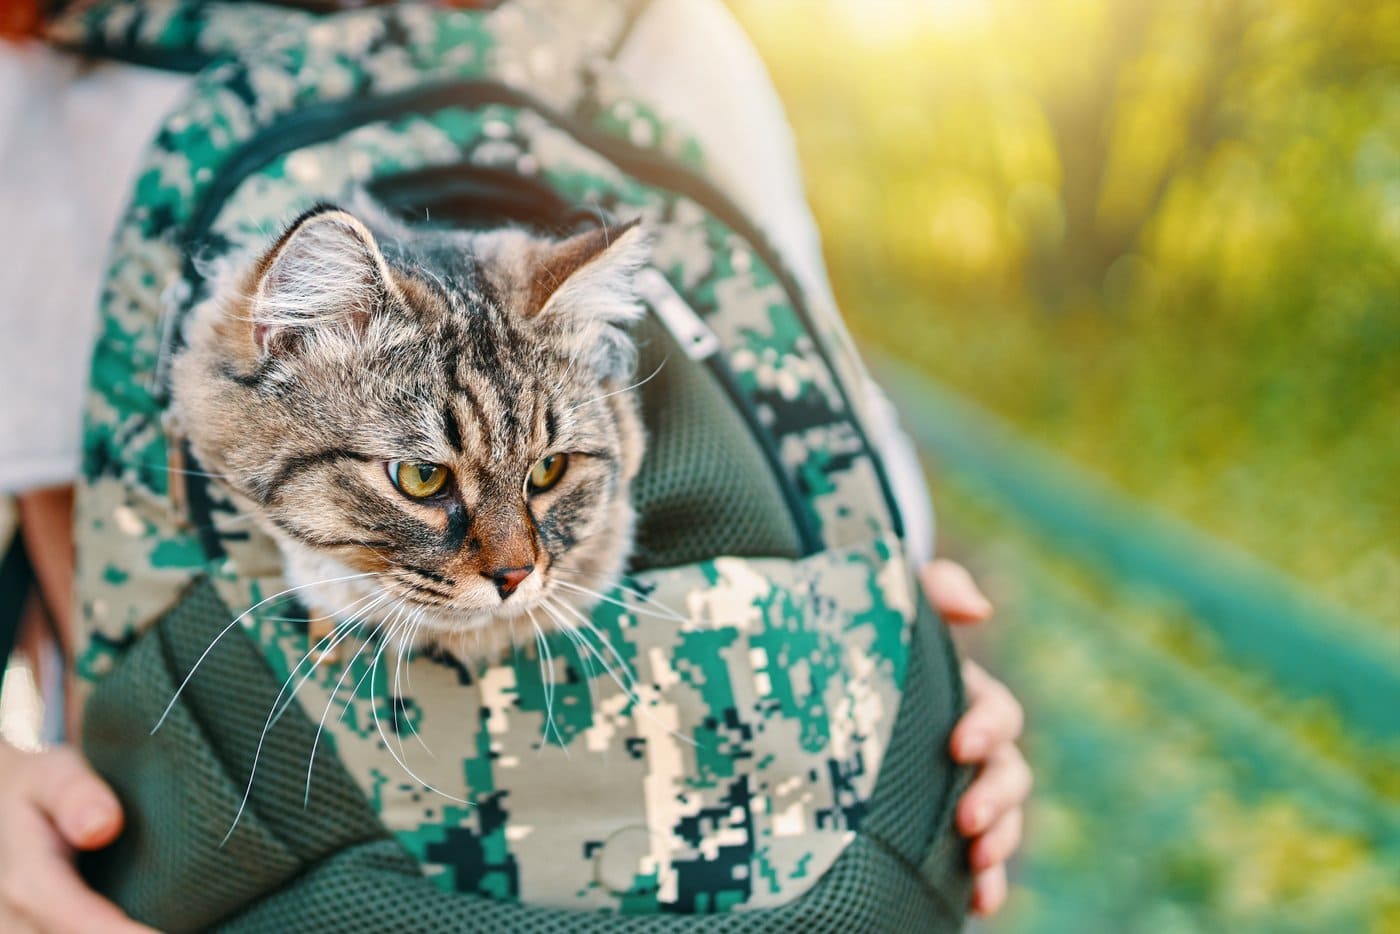 Cat in a pet backpack